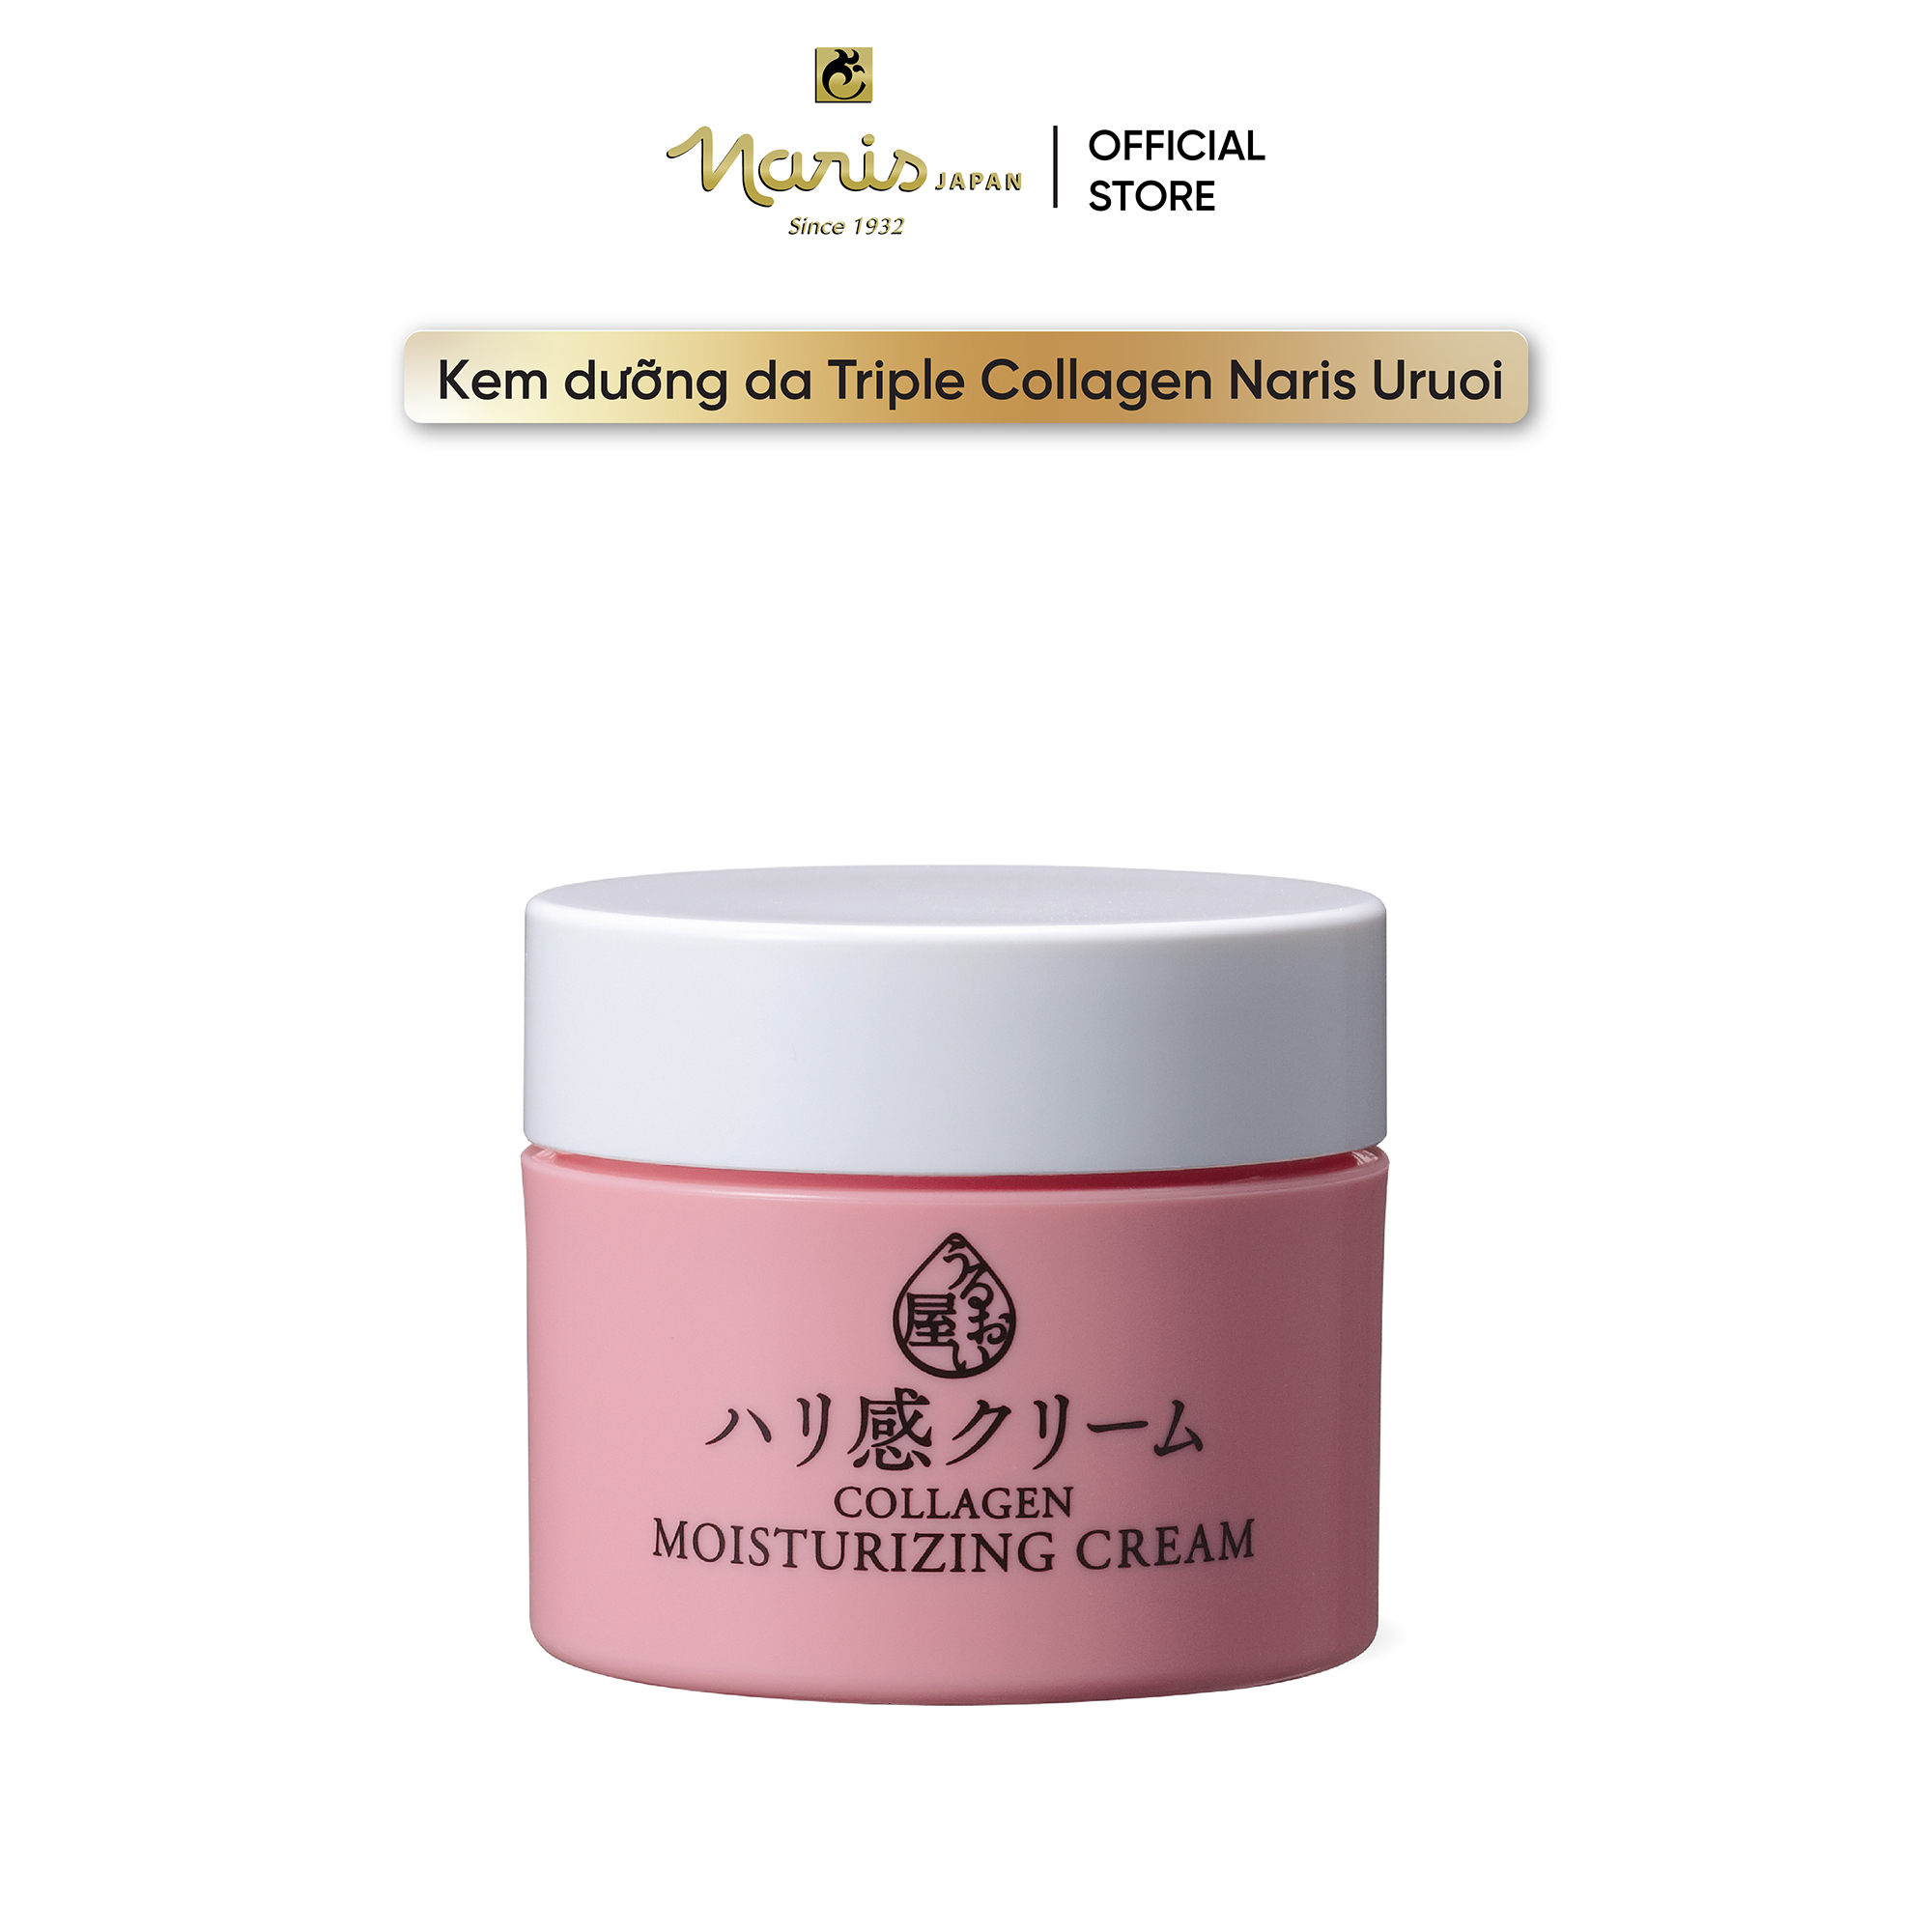 Kem dưỡng da Naris Uruoi Collagen Moisturizing Cream 48g